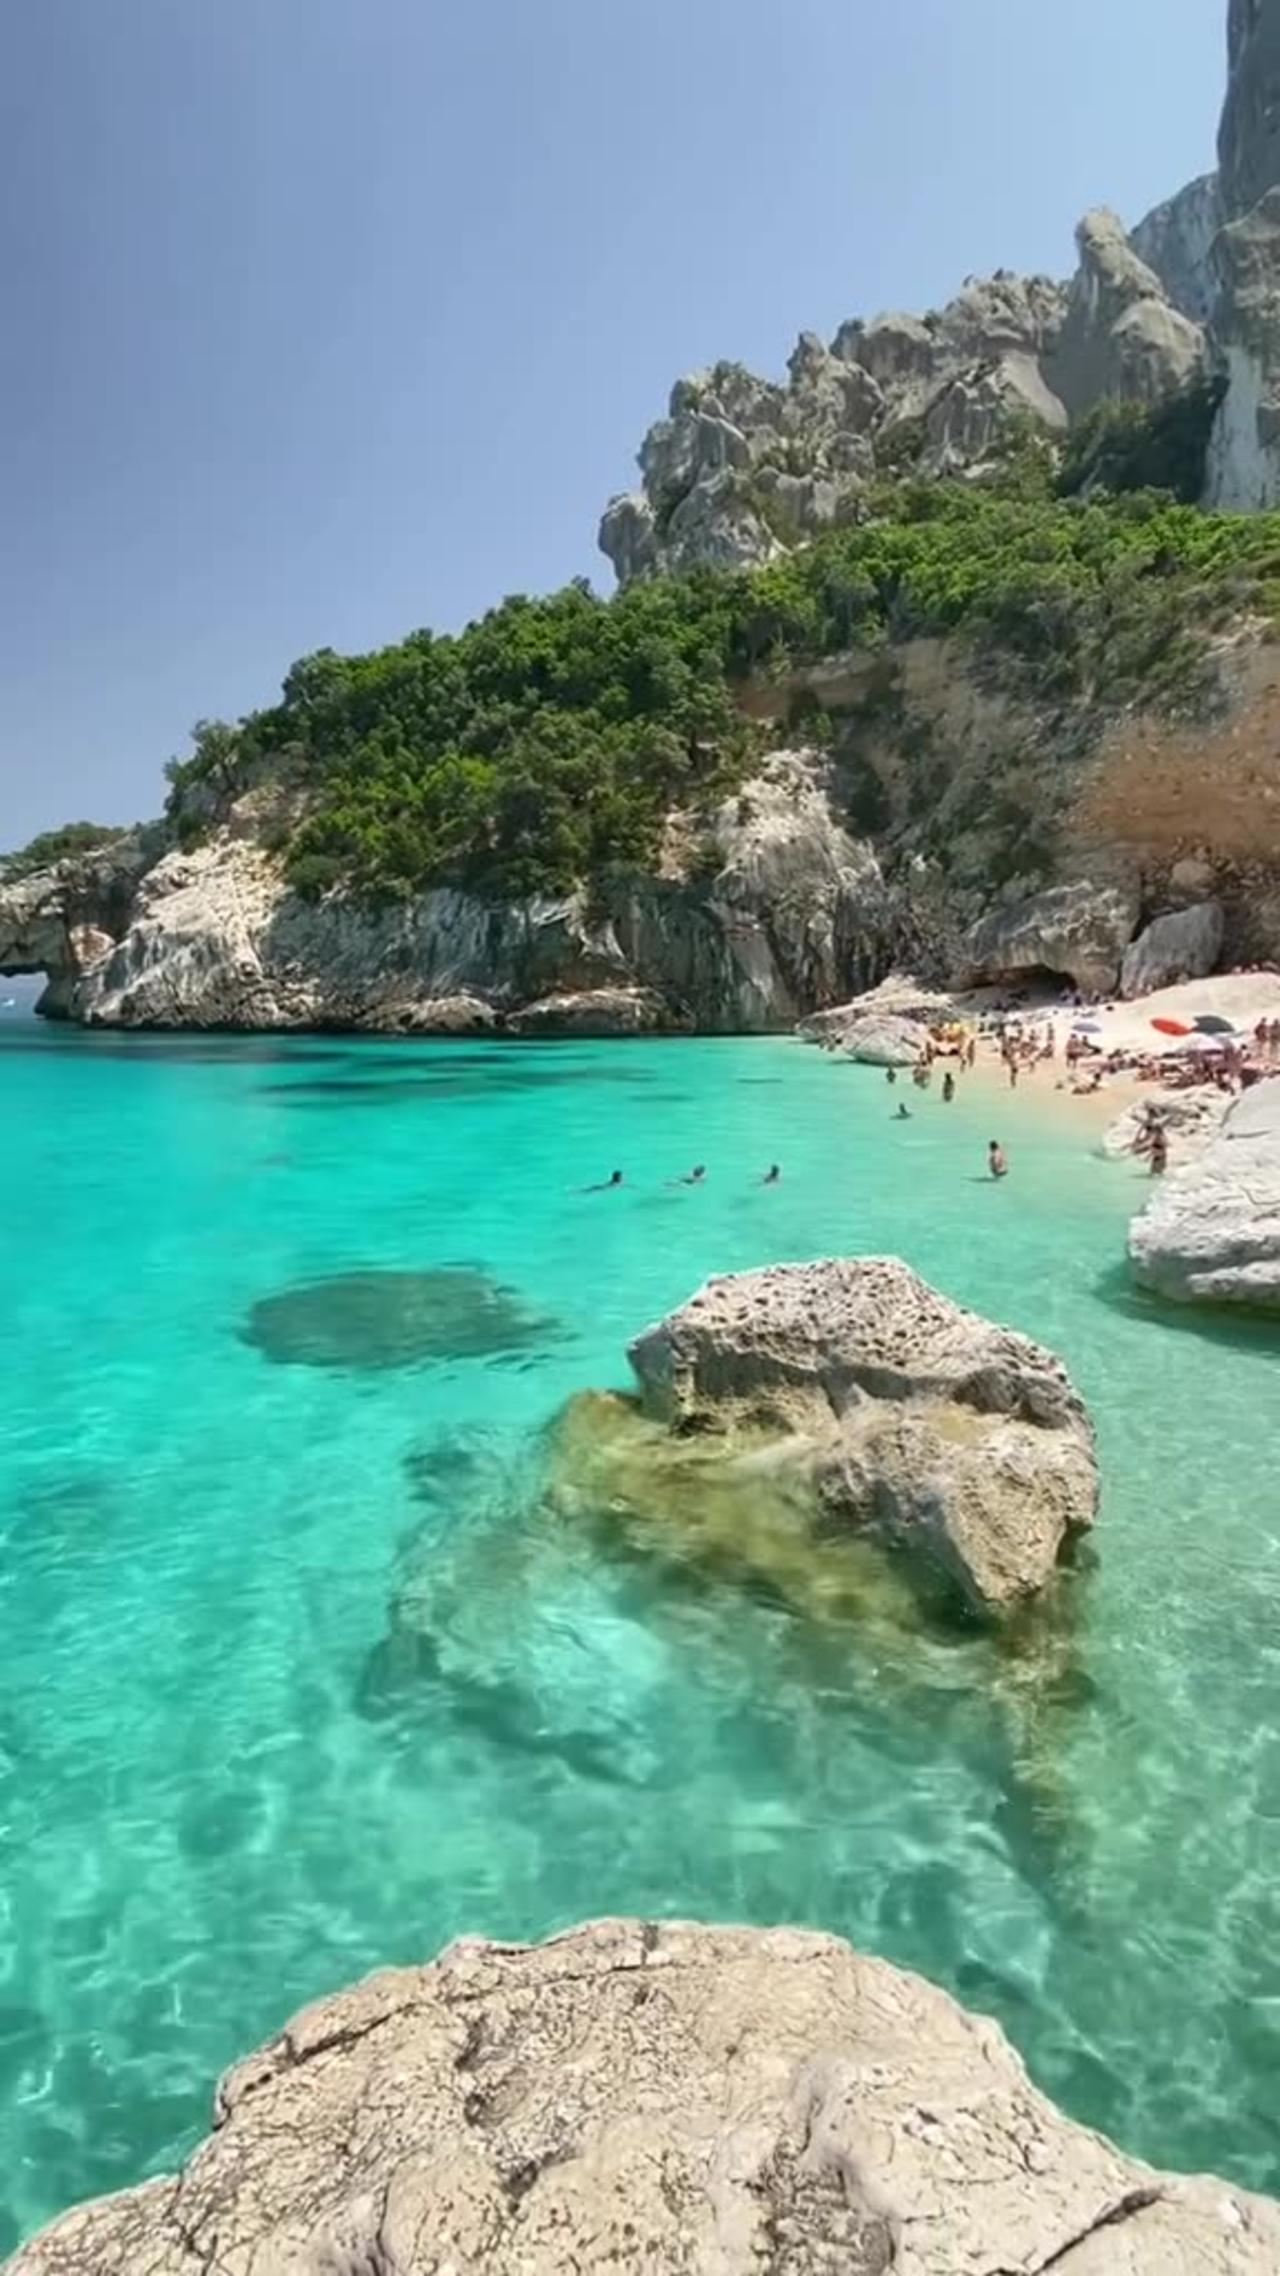 🇮🇹 Behold the Hidden Gem of the Amalfi Coast: Furore, Italy 🇮🇹